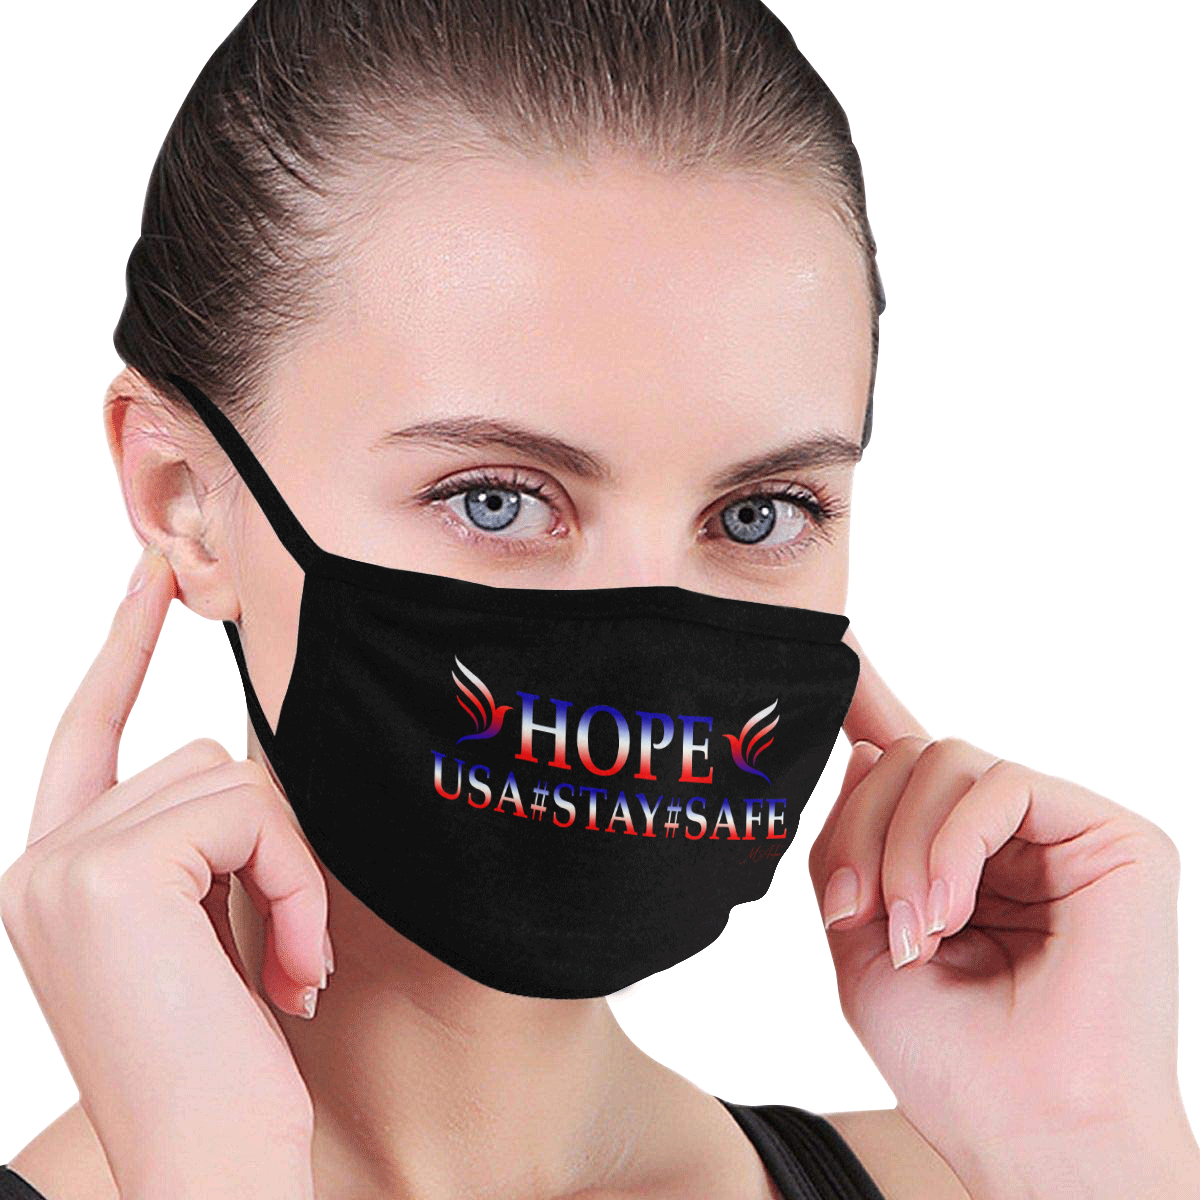 USA #STAY #SAFE HOPE Mouth Mask